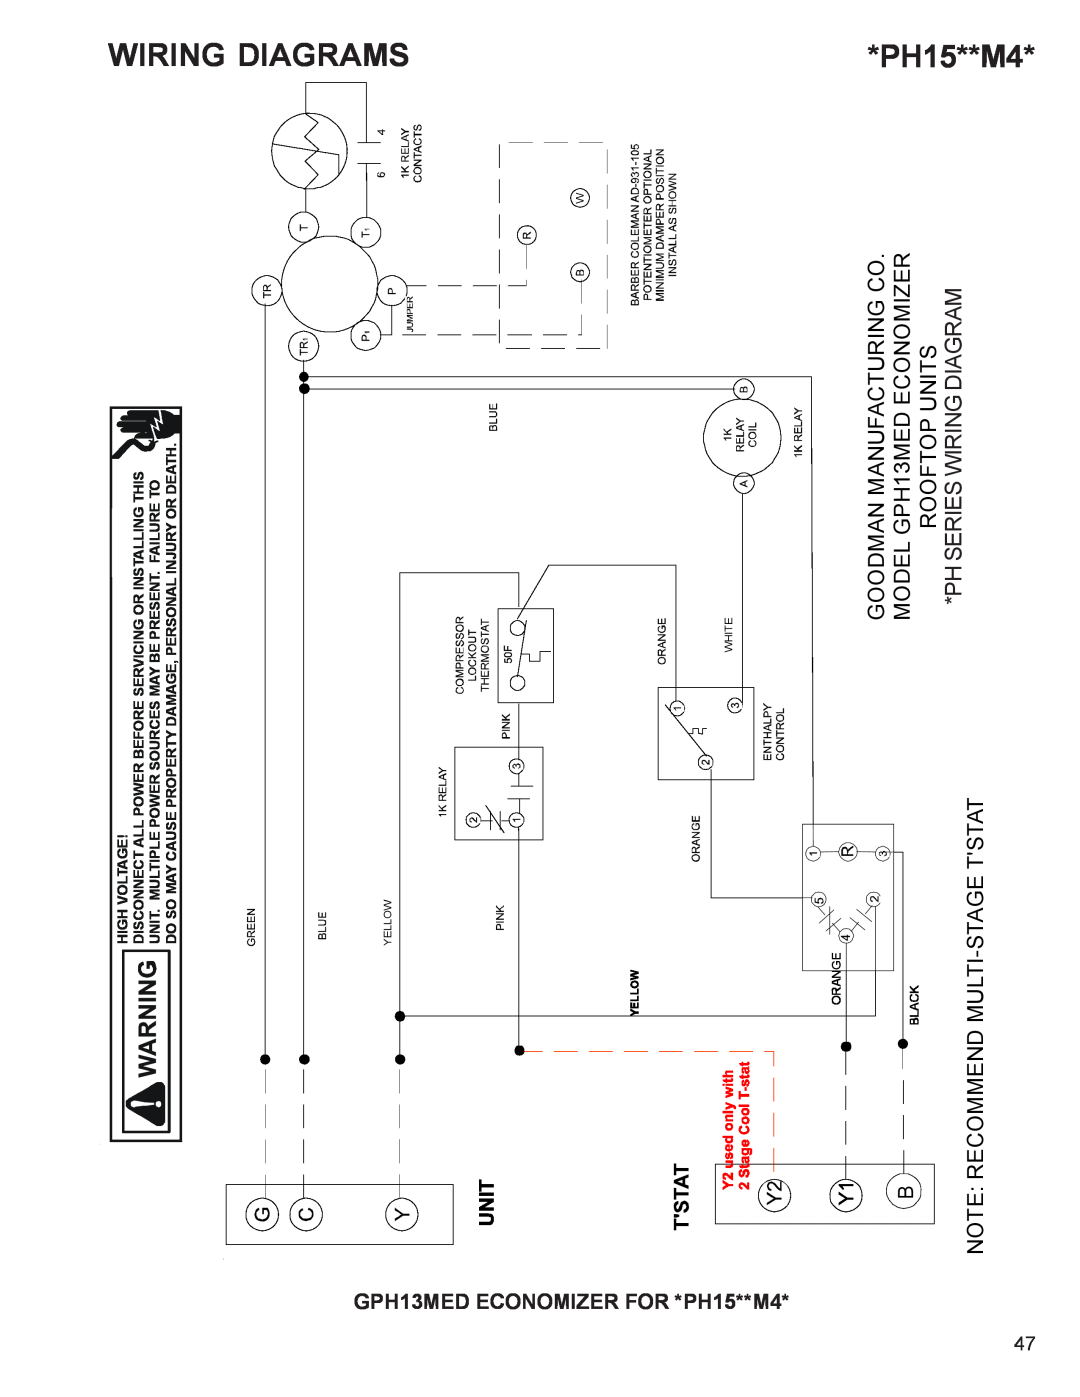 Goodman Mfg R-410A manual GPH13MED ECONOMIZER FOR *PH15**M4, Diagrams, Goodman Manufacturing Co, MODEL GPH13MED ECONOMIZER 